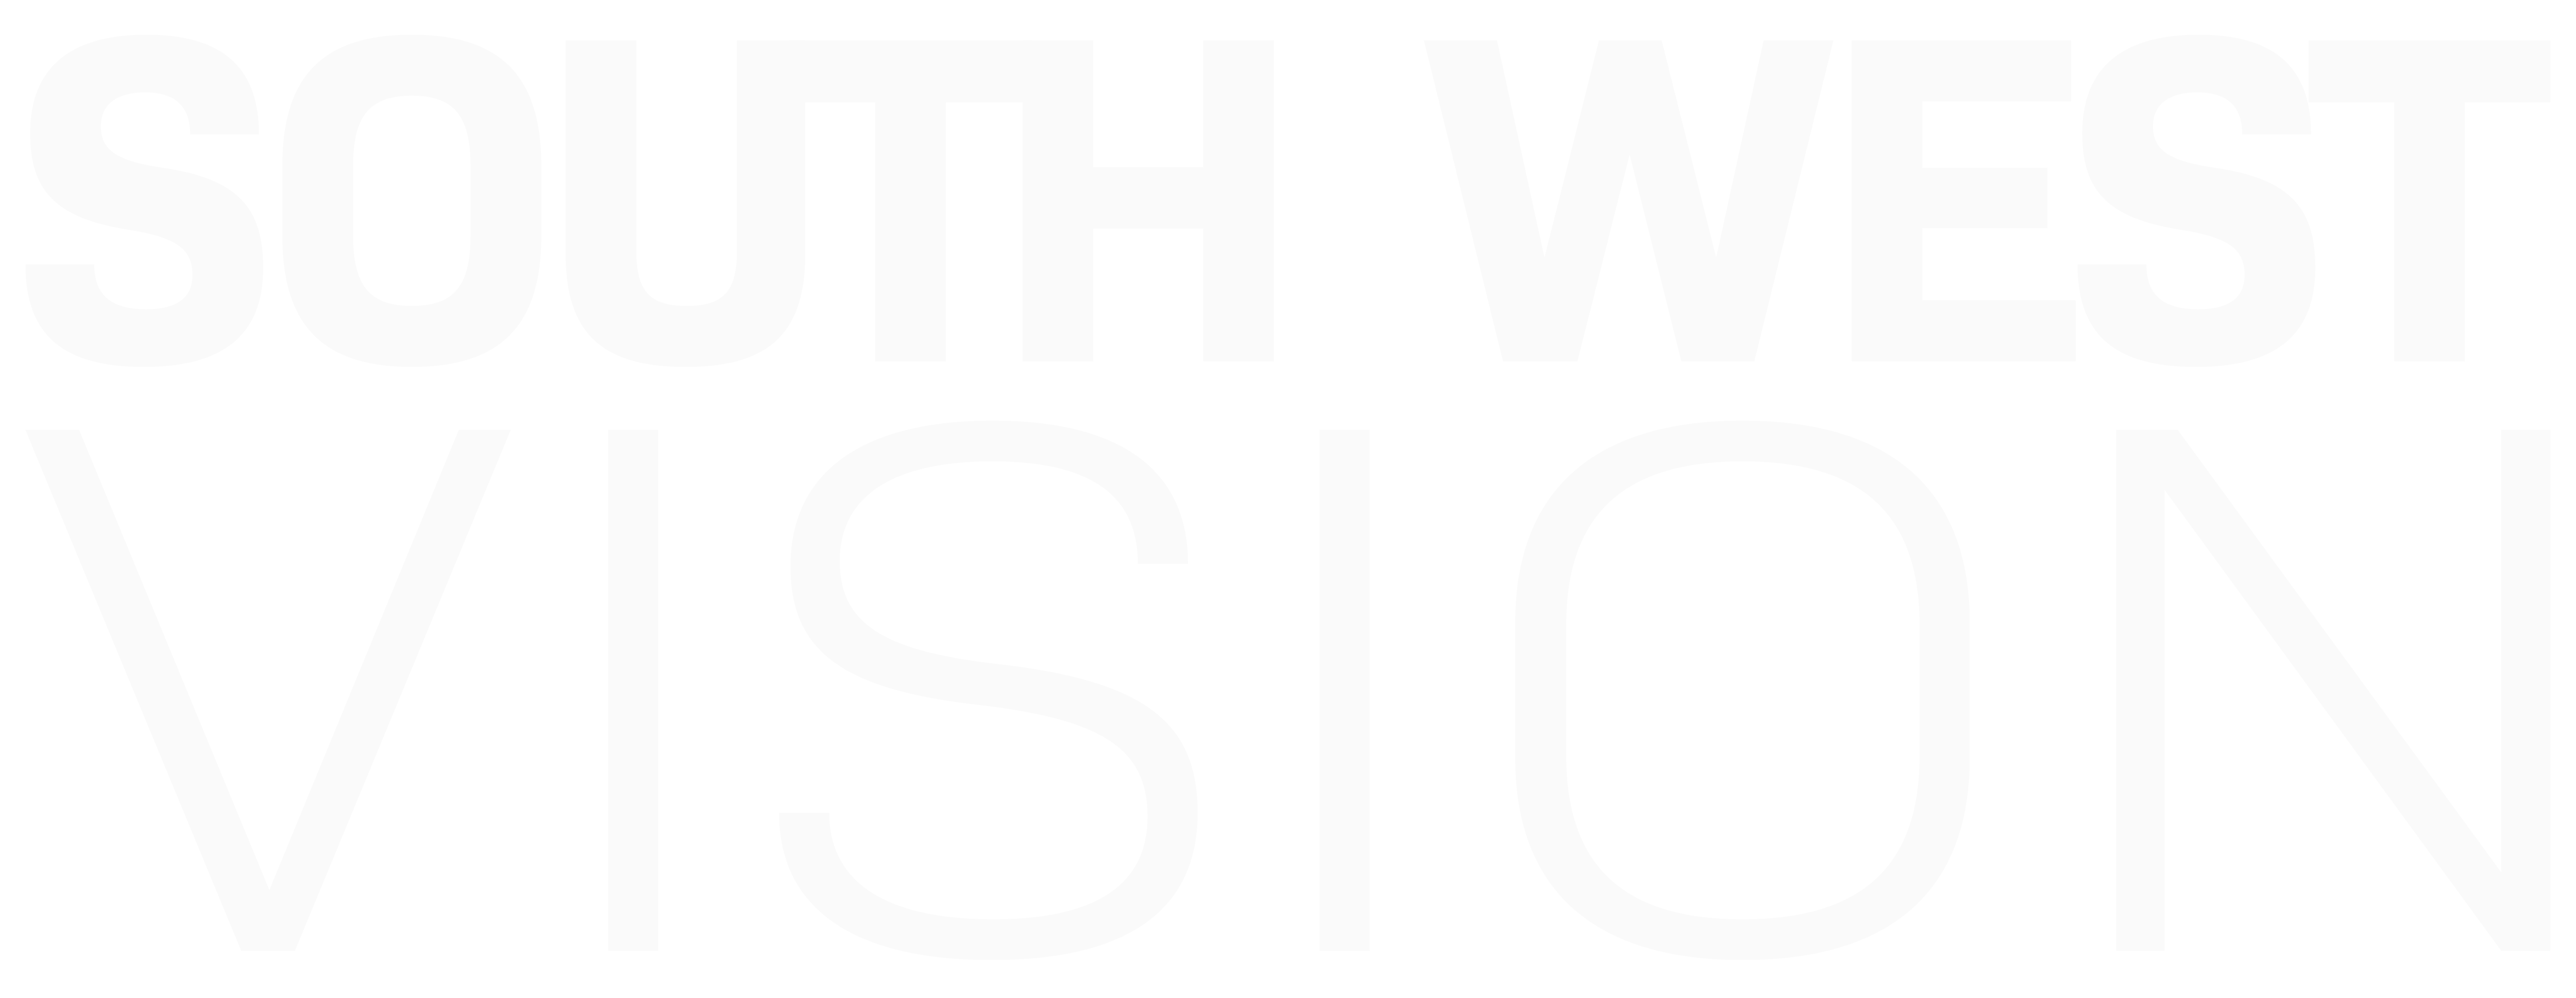 southwestvision_logo